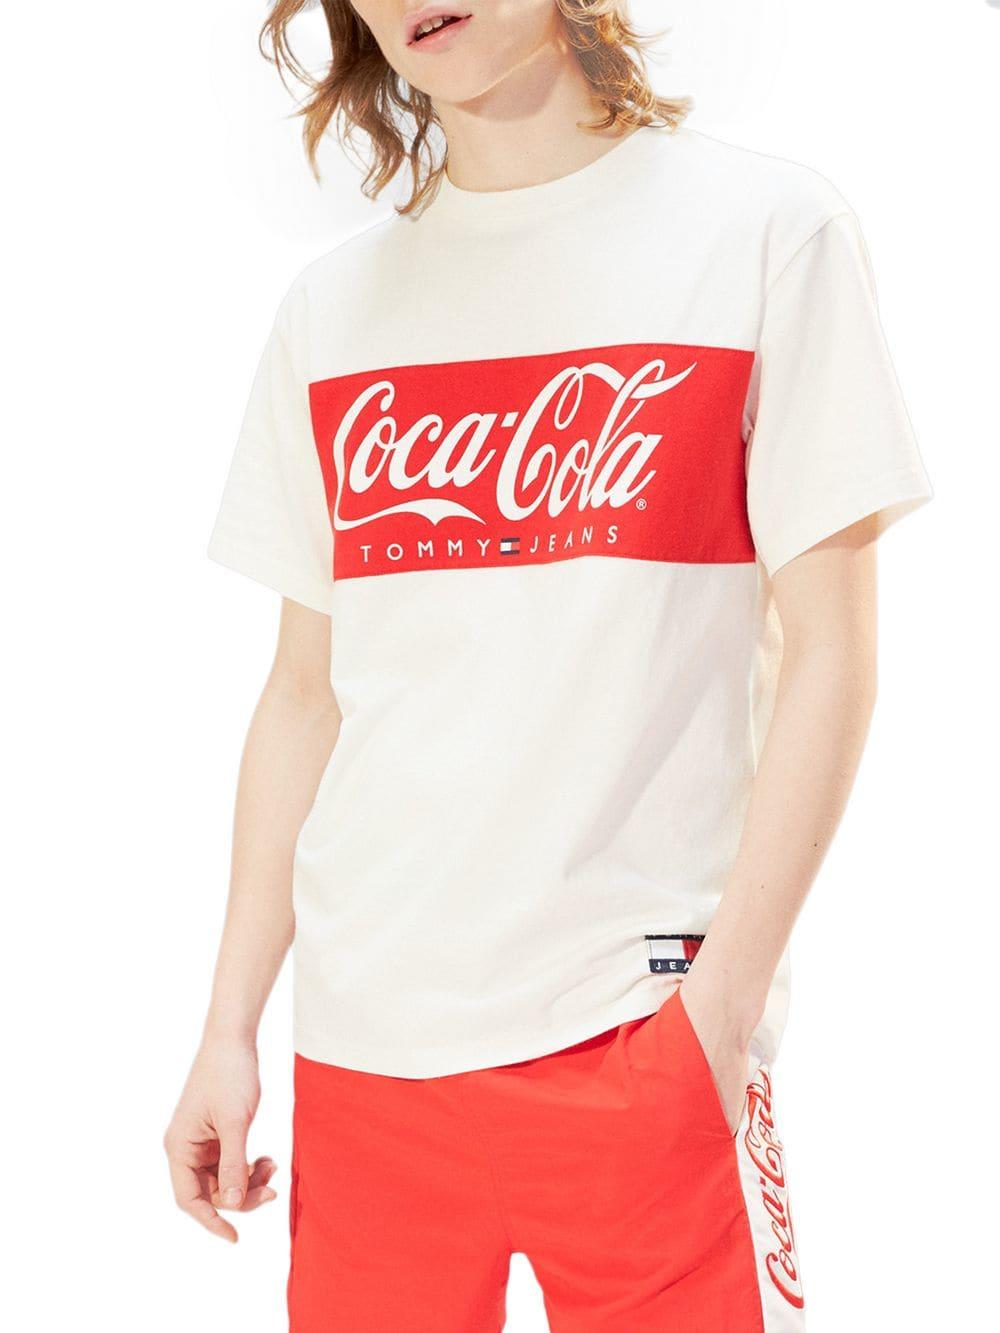 Tommy Hilfiger T Shirt Coca Cola Factory Sale, SAVE 59% - toska.is